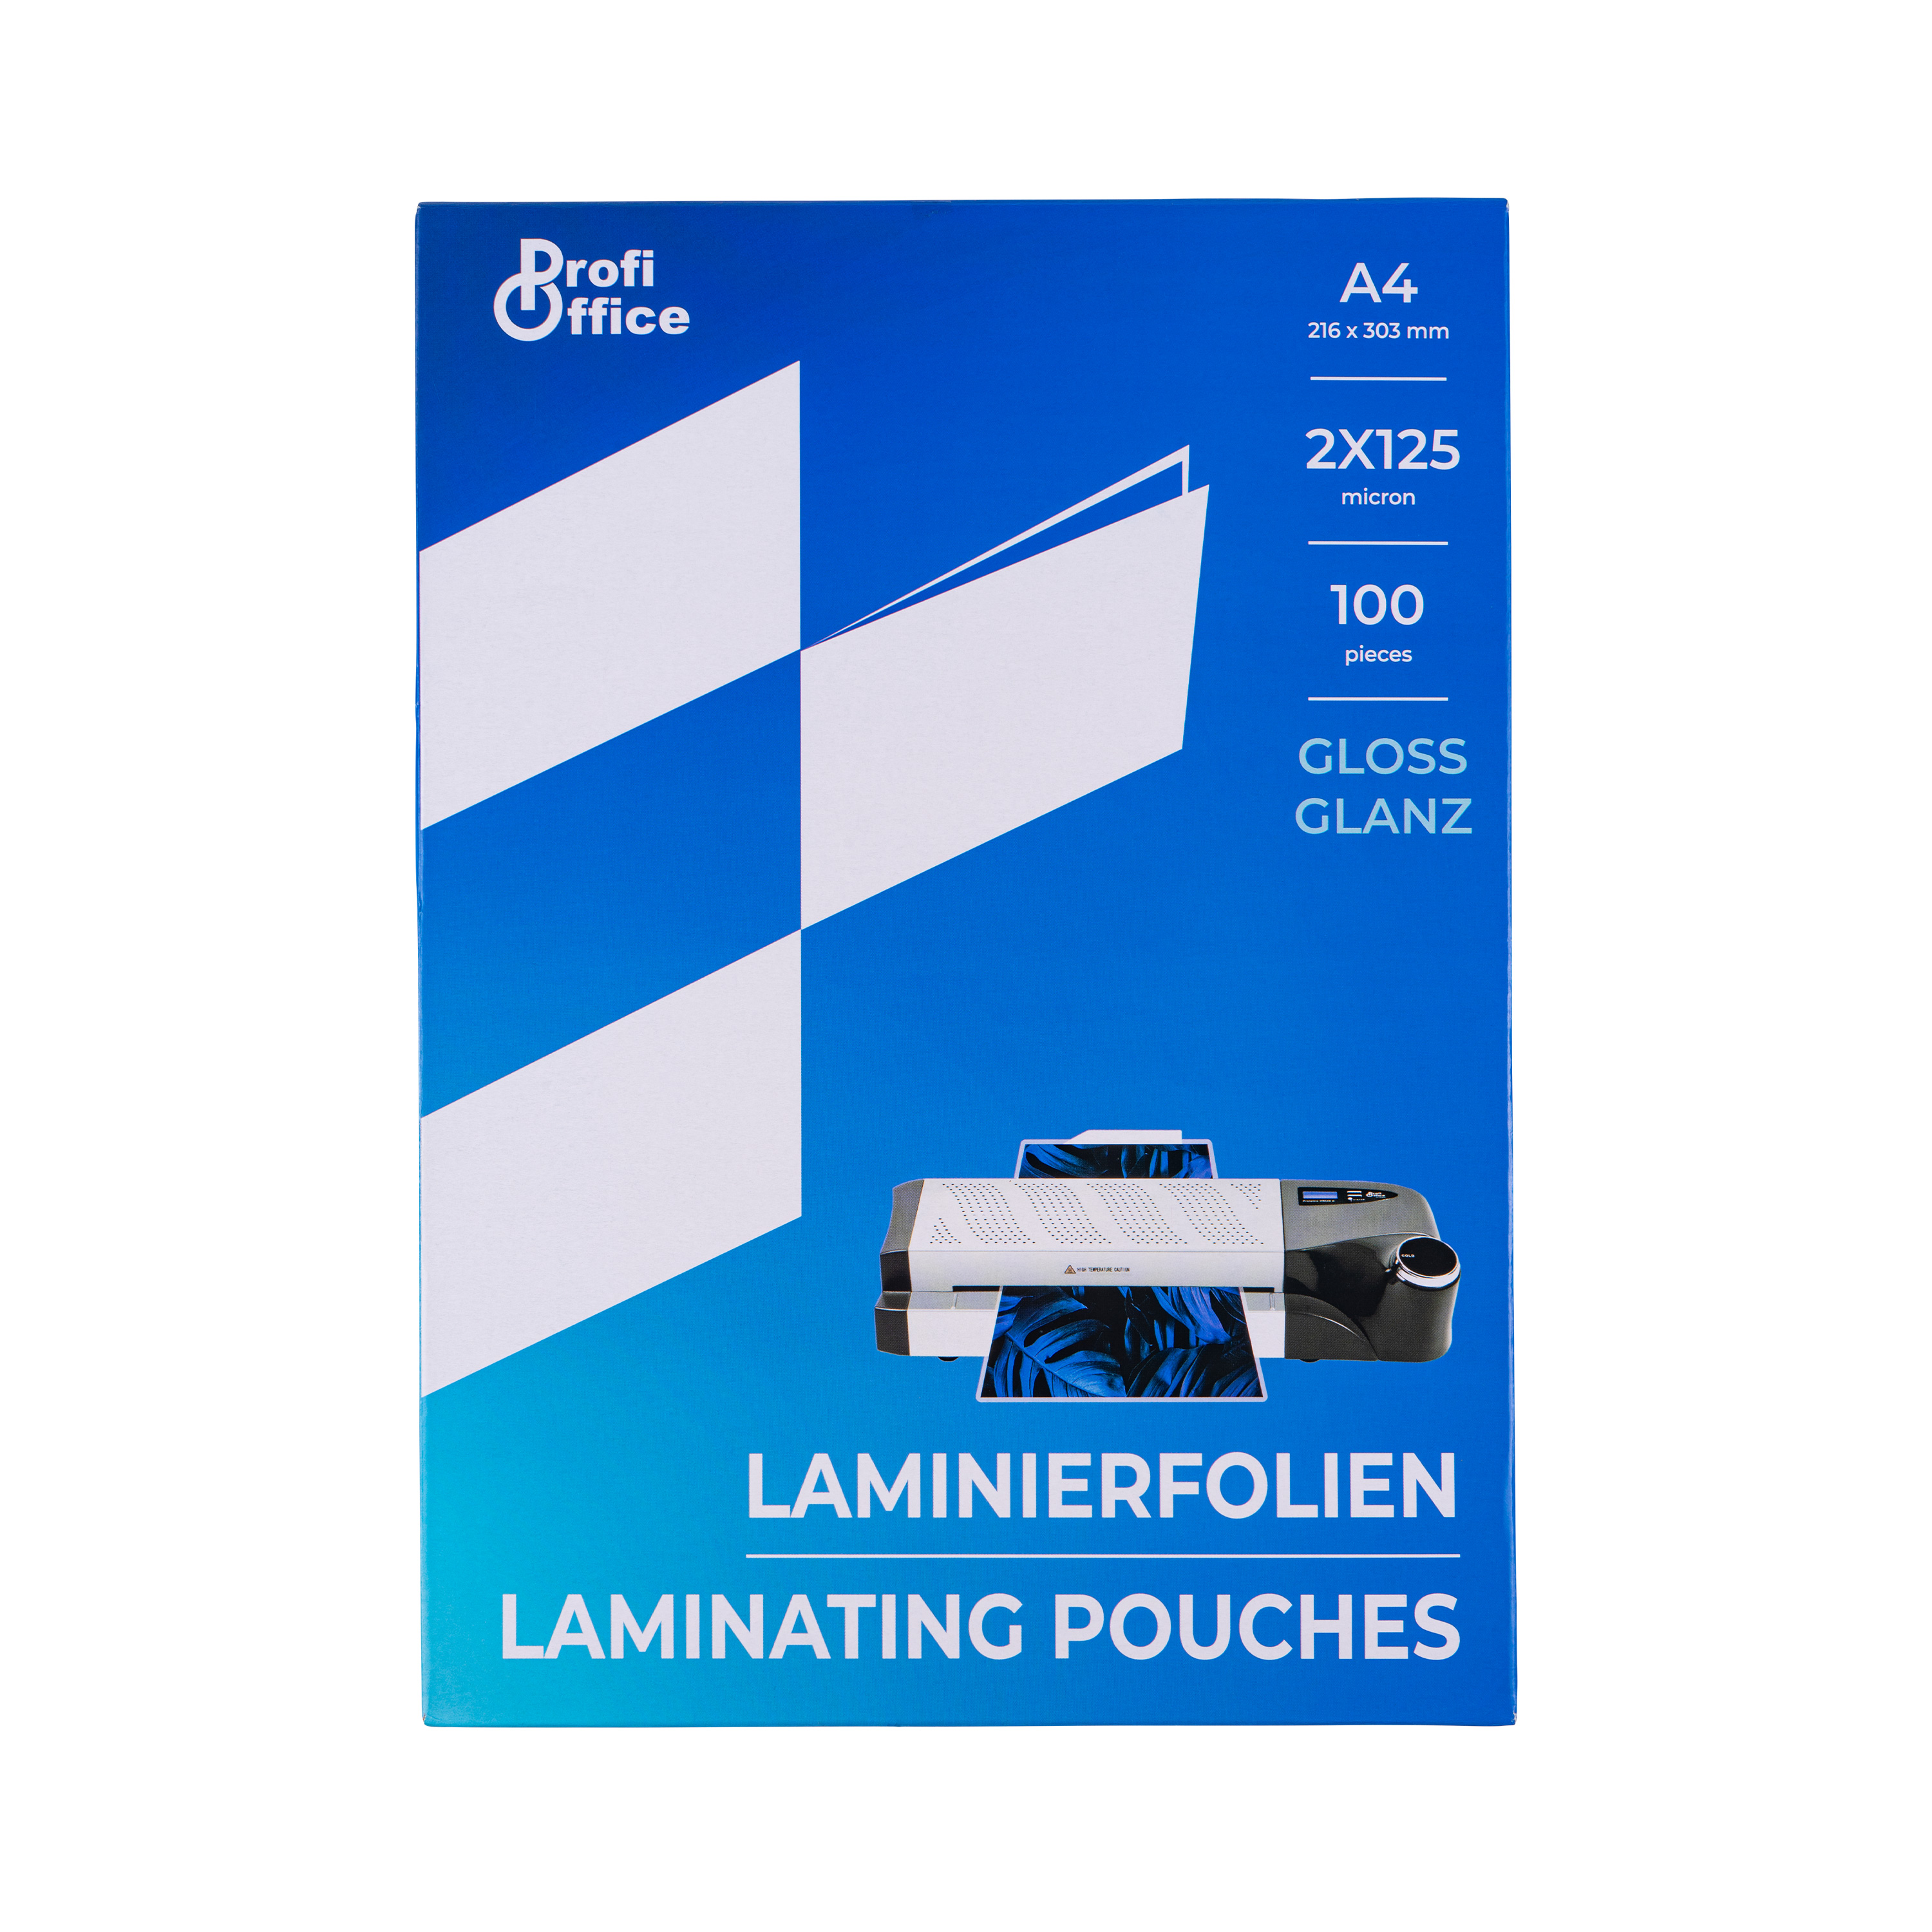 Laminierfolie 'DIN A4' 2x125 mikron